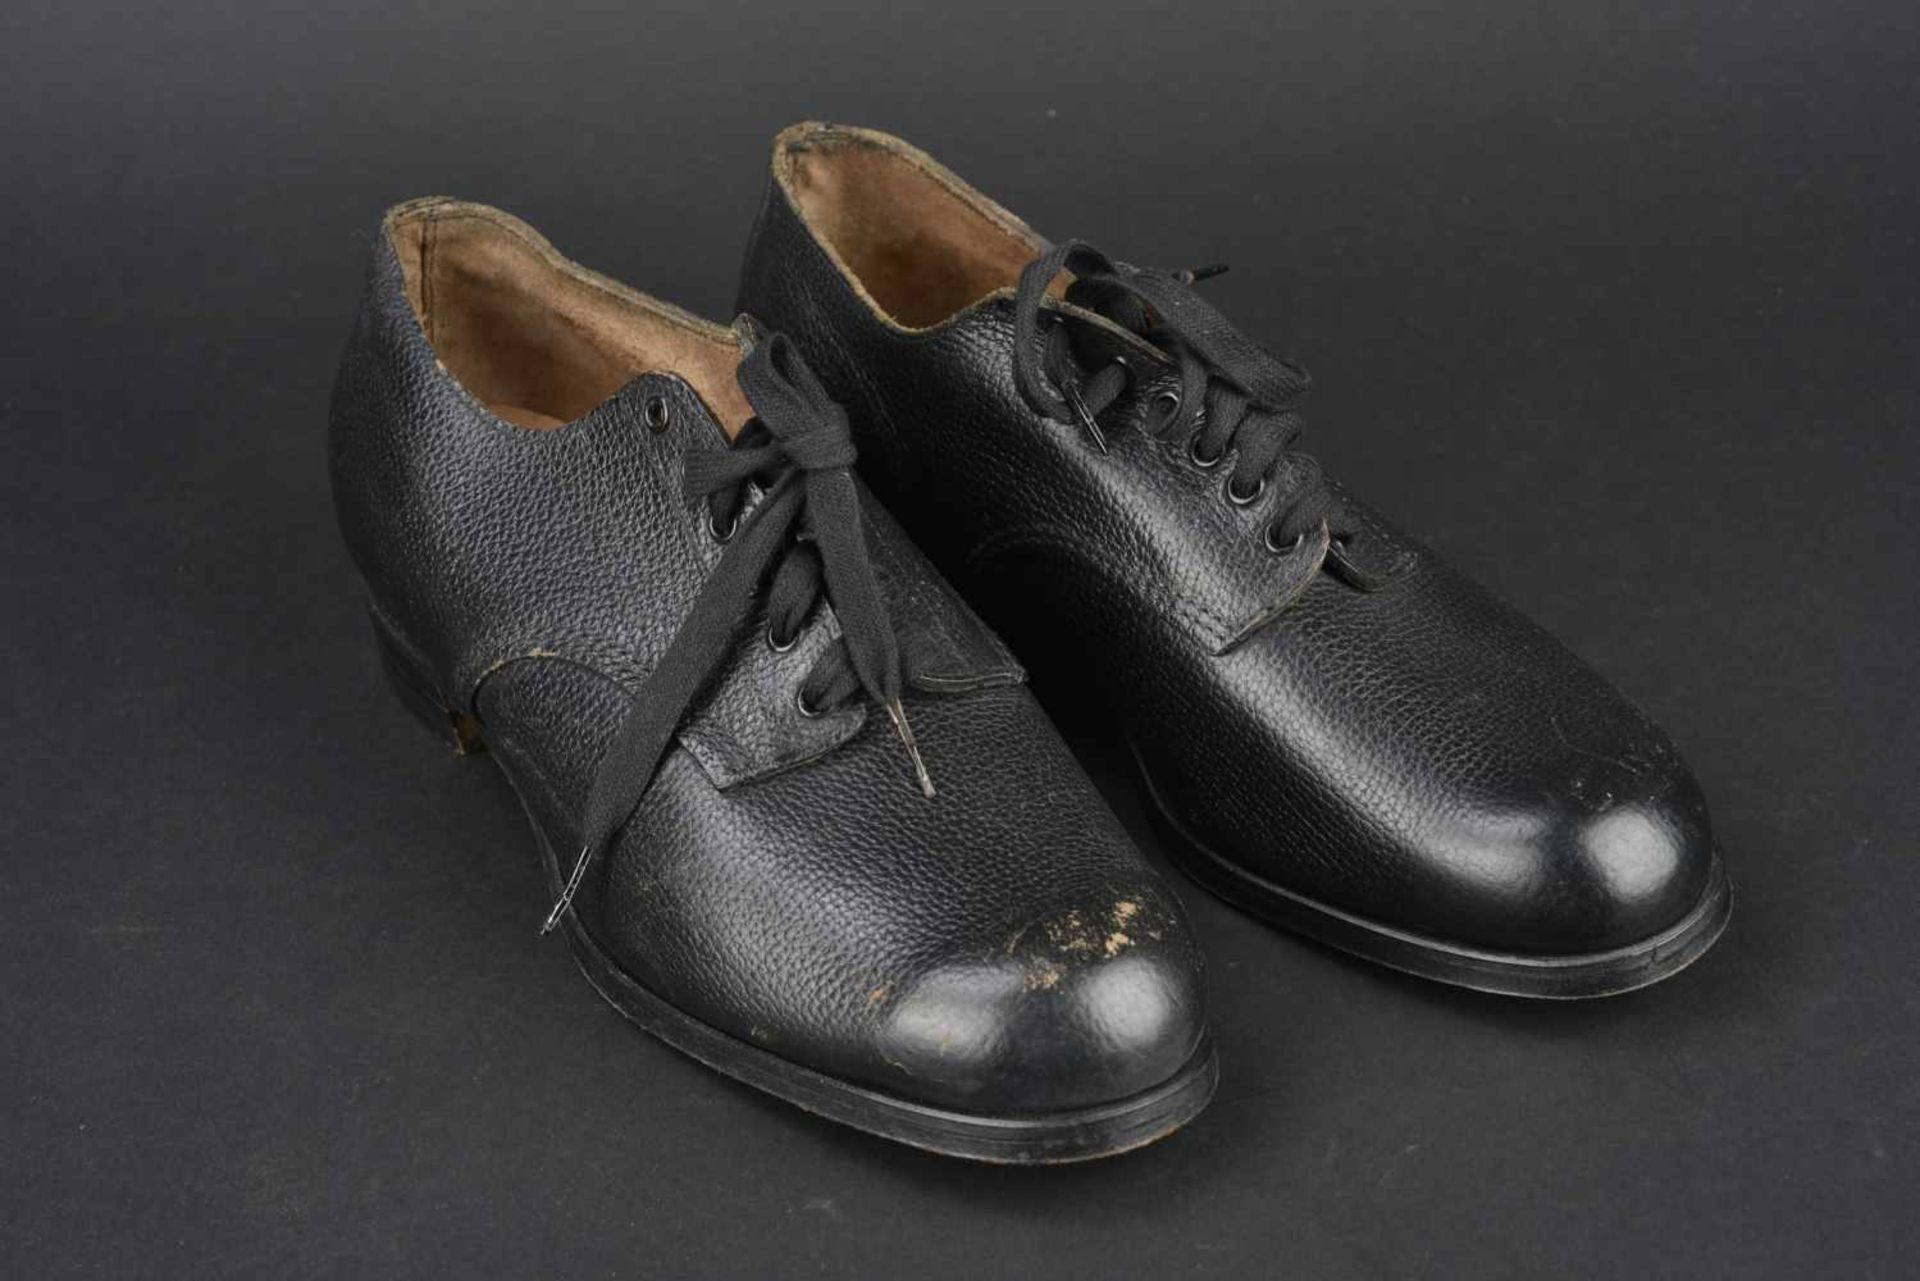 Chaussures basses En cuir noir, six illets de laçage, les lacets sont postérieurs. Semelles